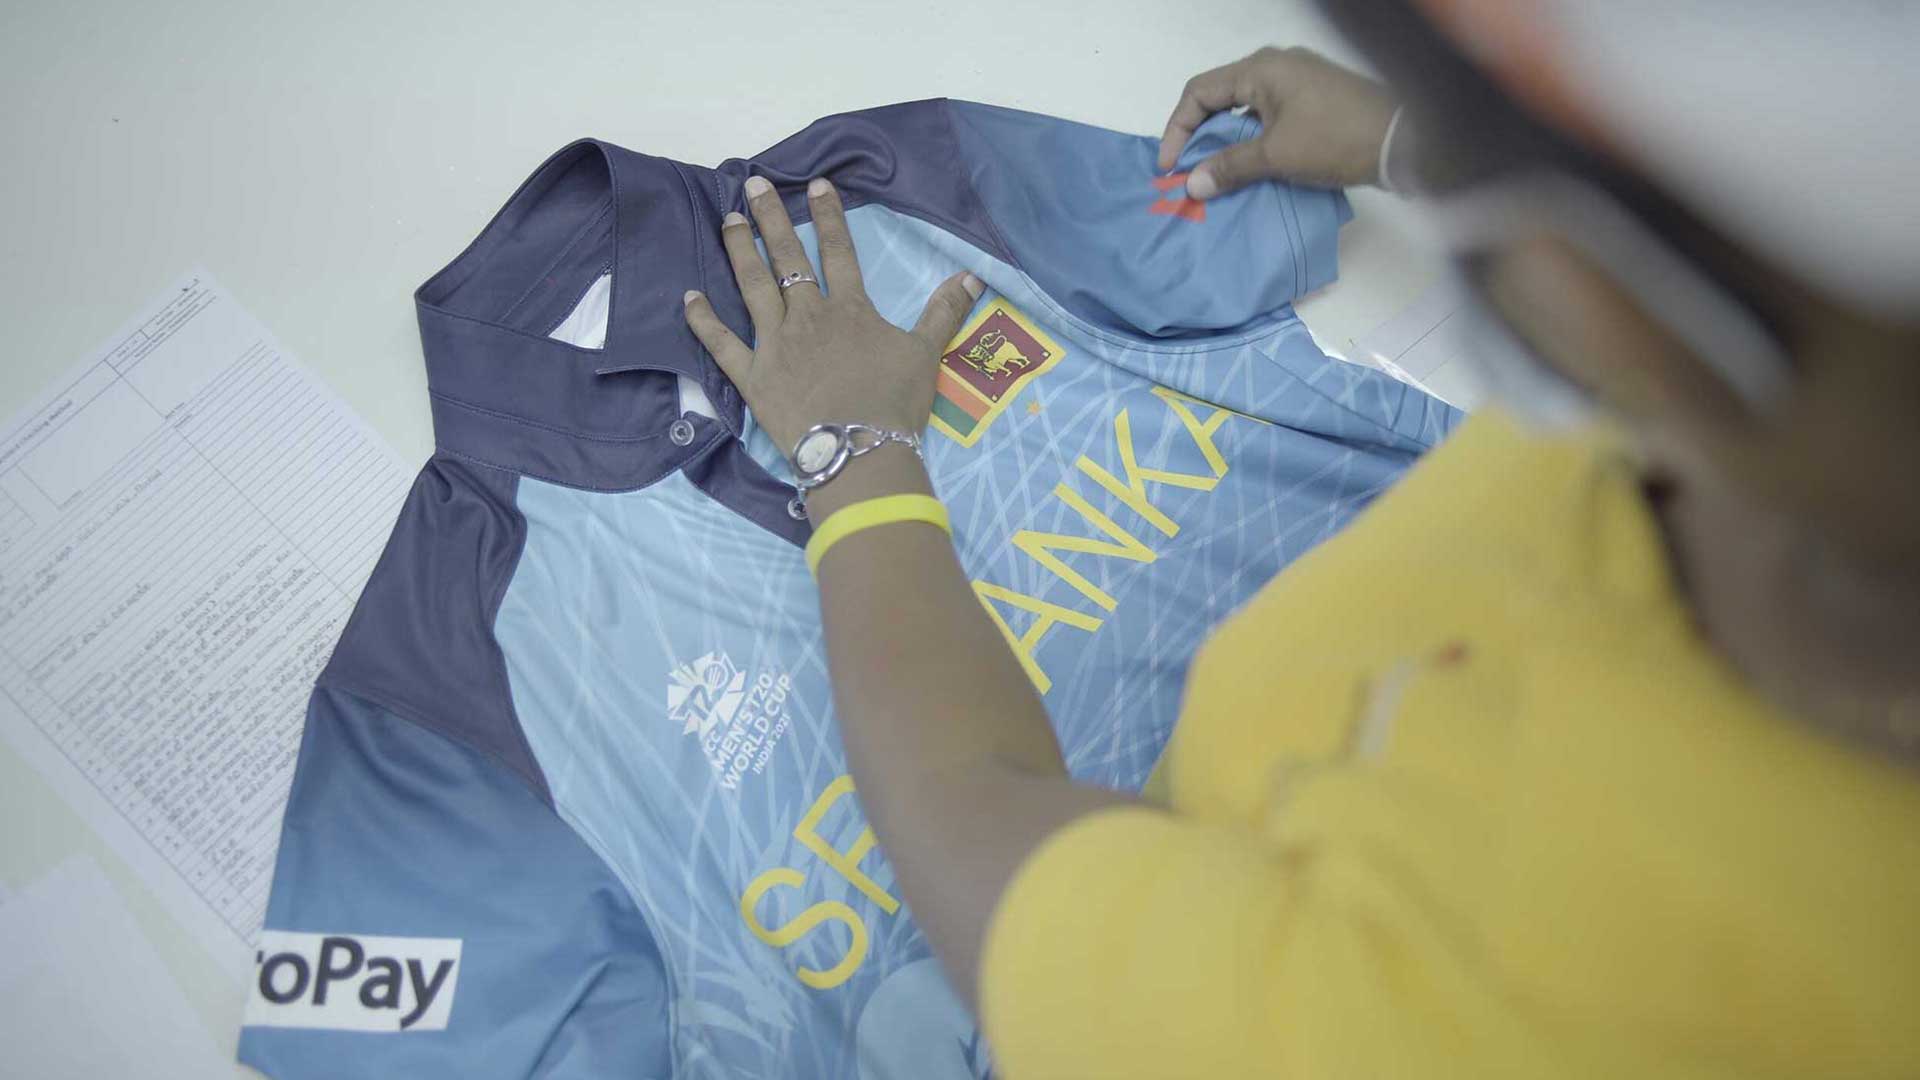 Sri Lanka cricket jersey manufacturer